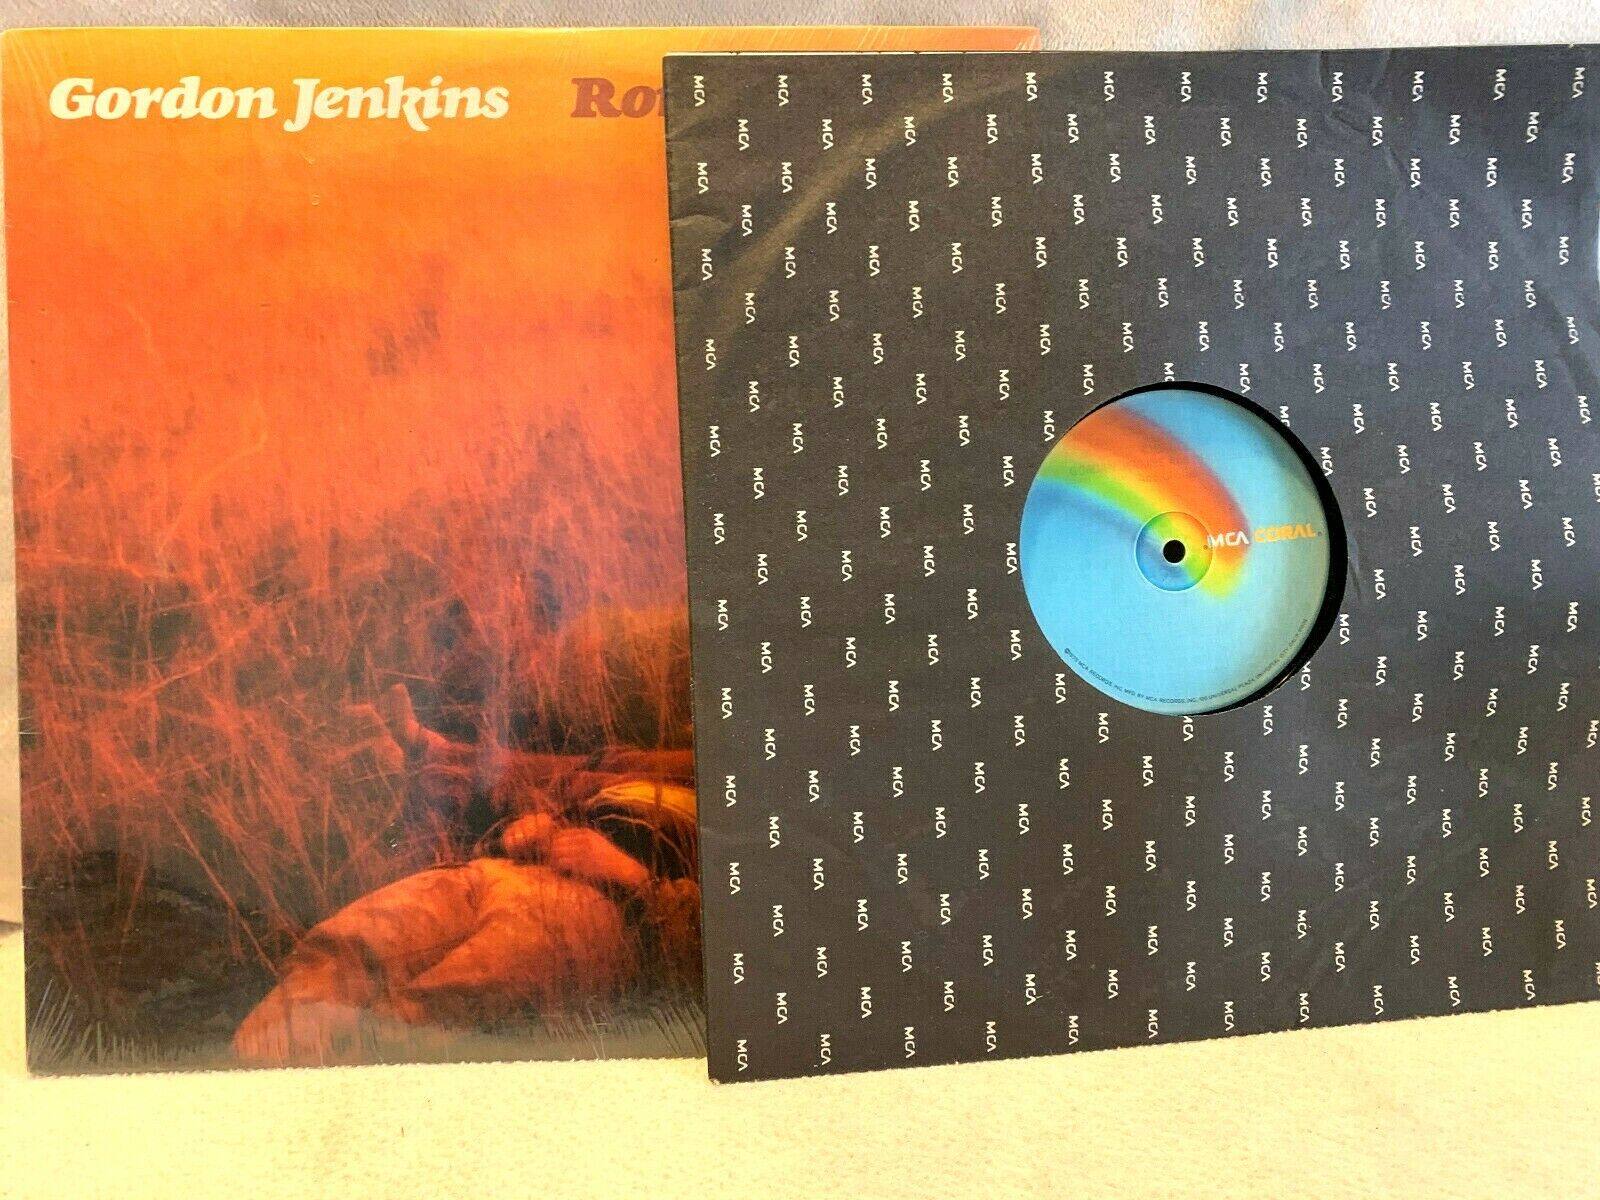 Gordon Jenkins Romance Vinyl Record Album Vintage Music LP 1973